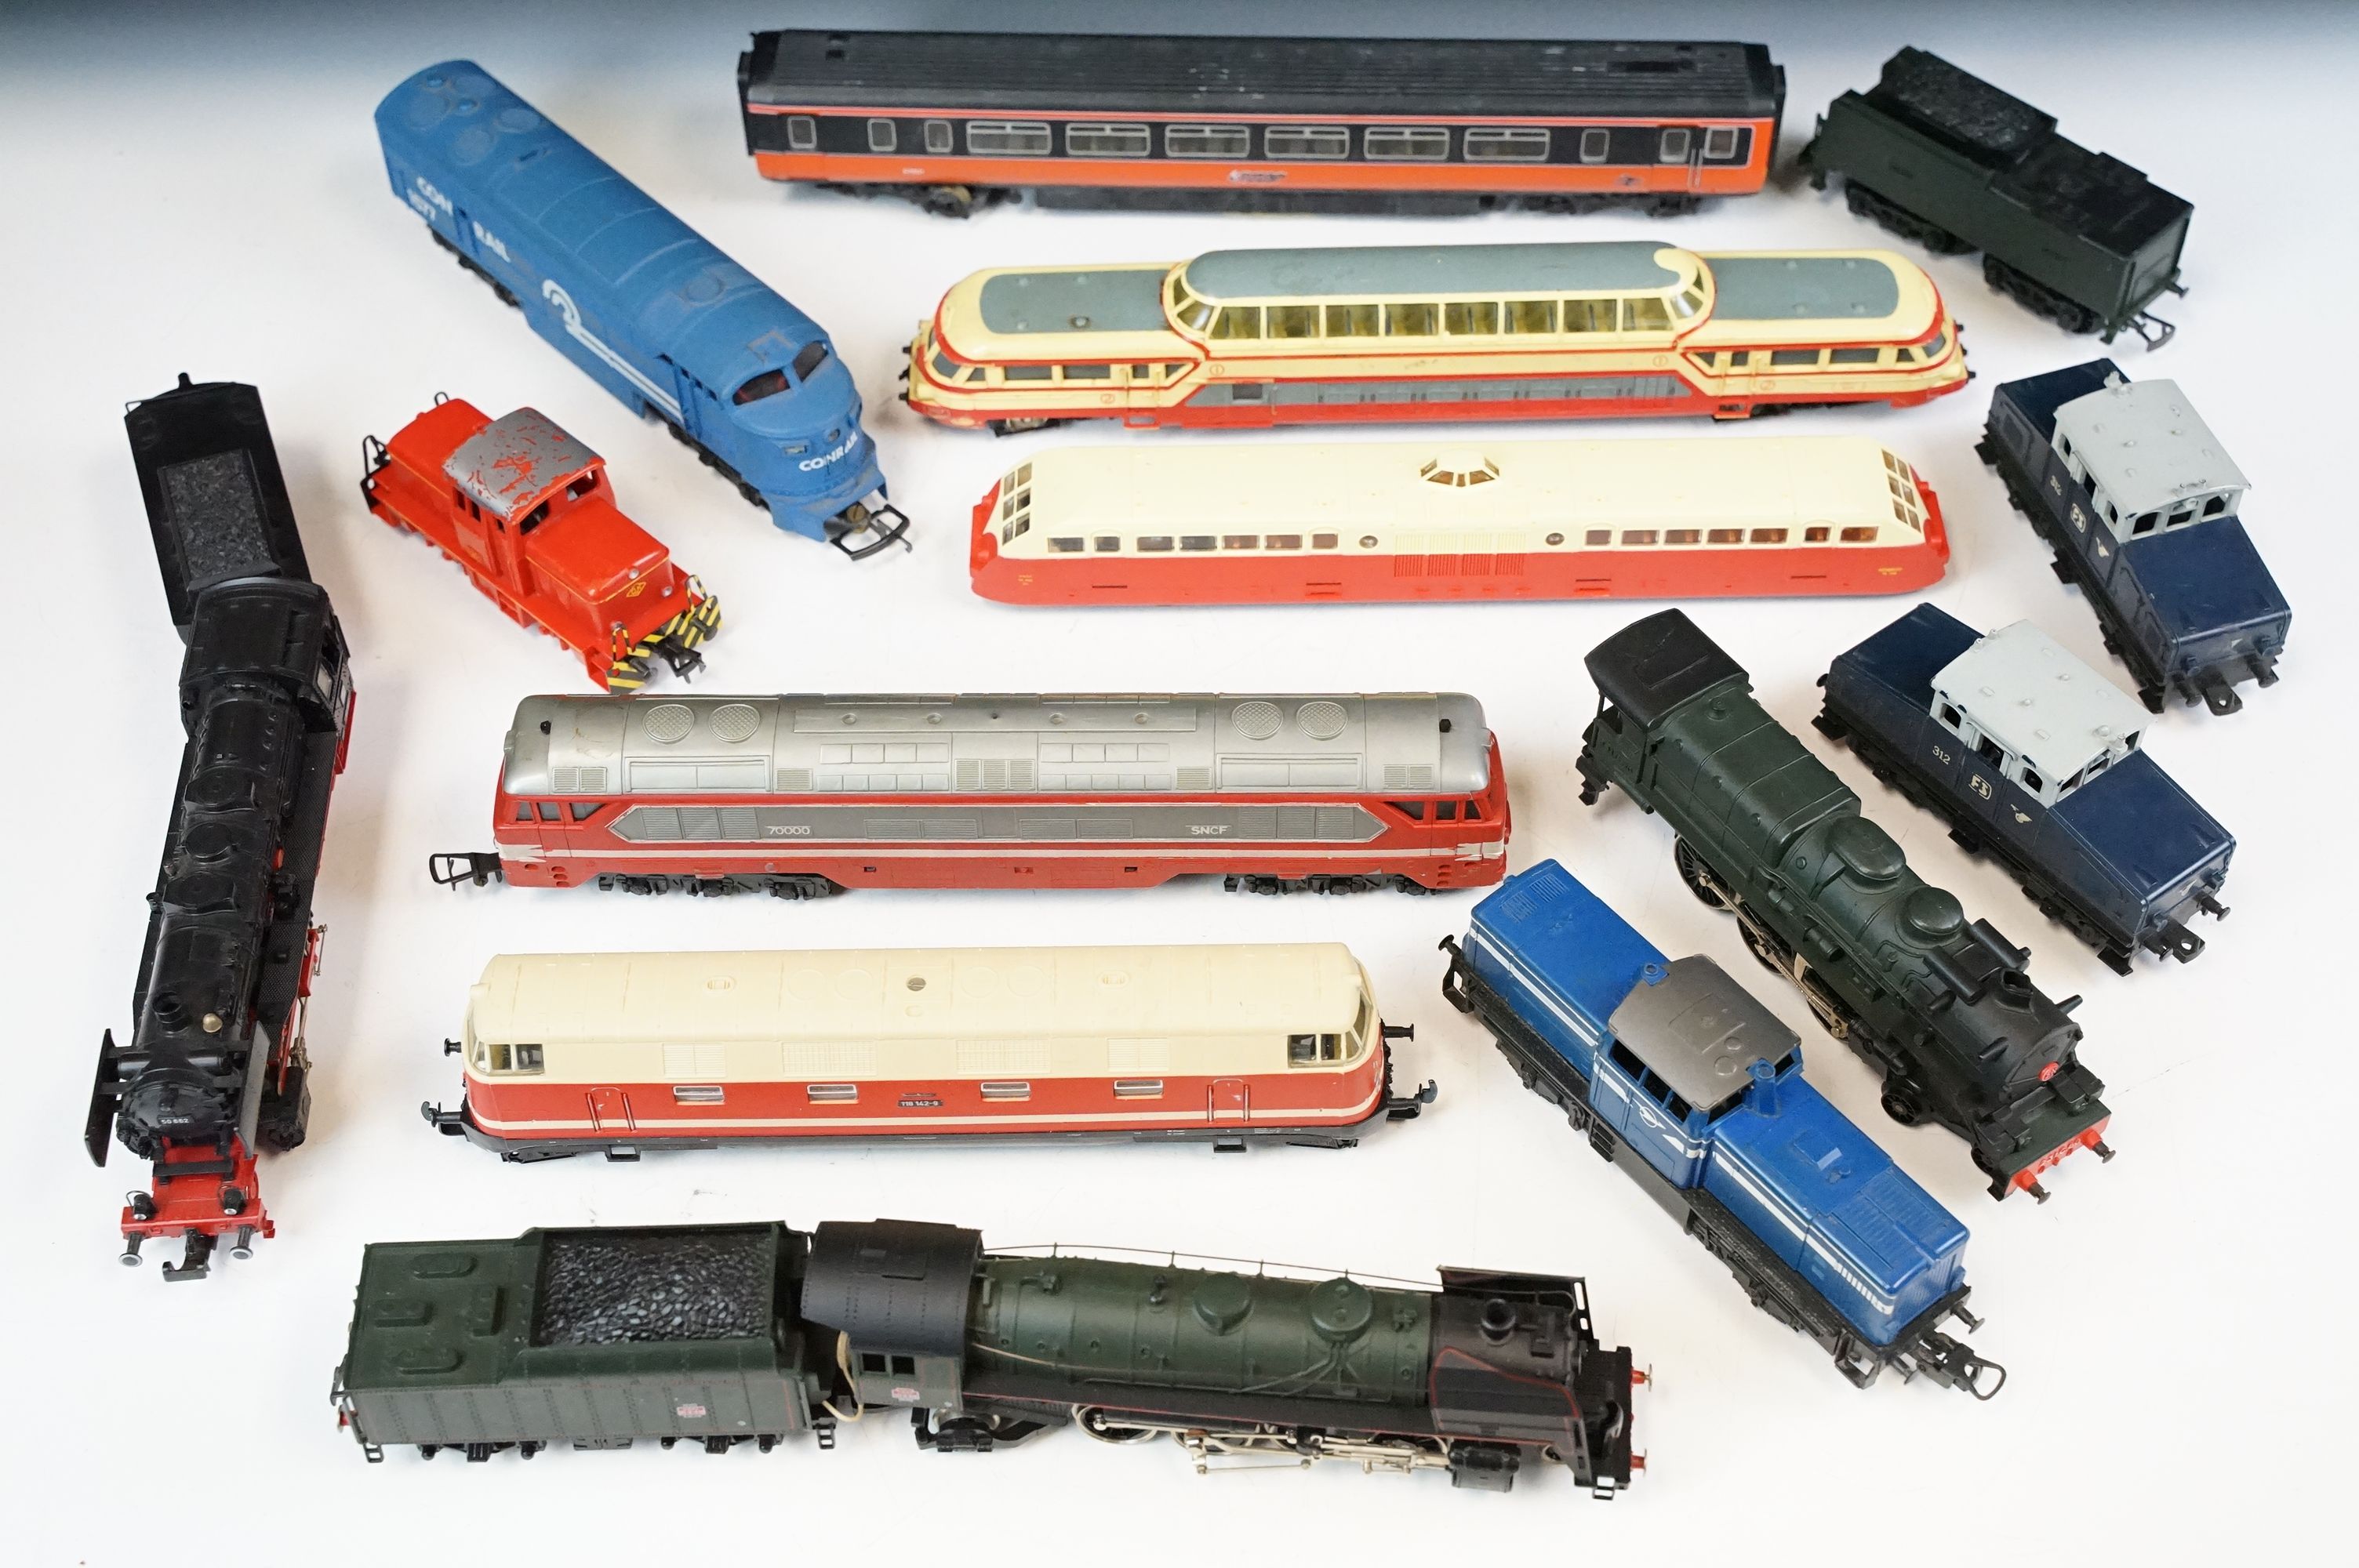 13 HO gauge locomotives to include Gutzoid, Jouef, RSO, Lima, Fleischmann featuring Gutzoid 118